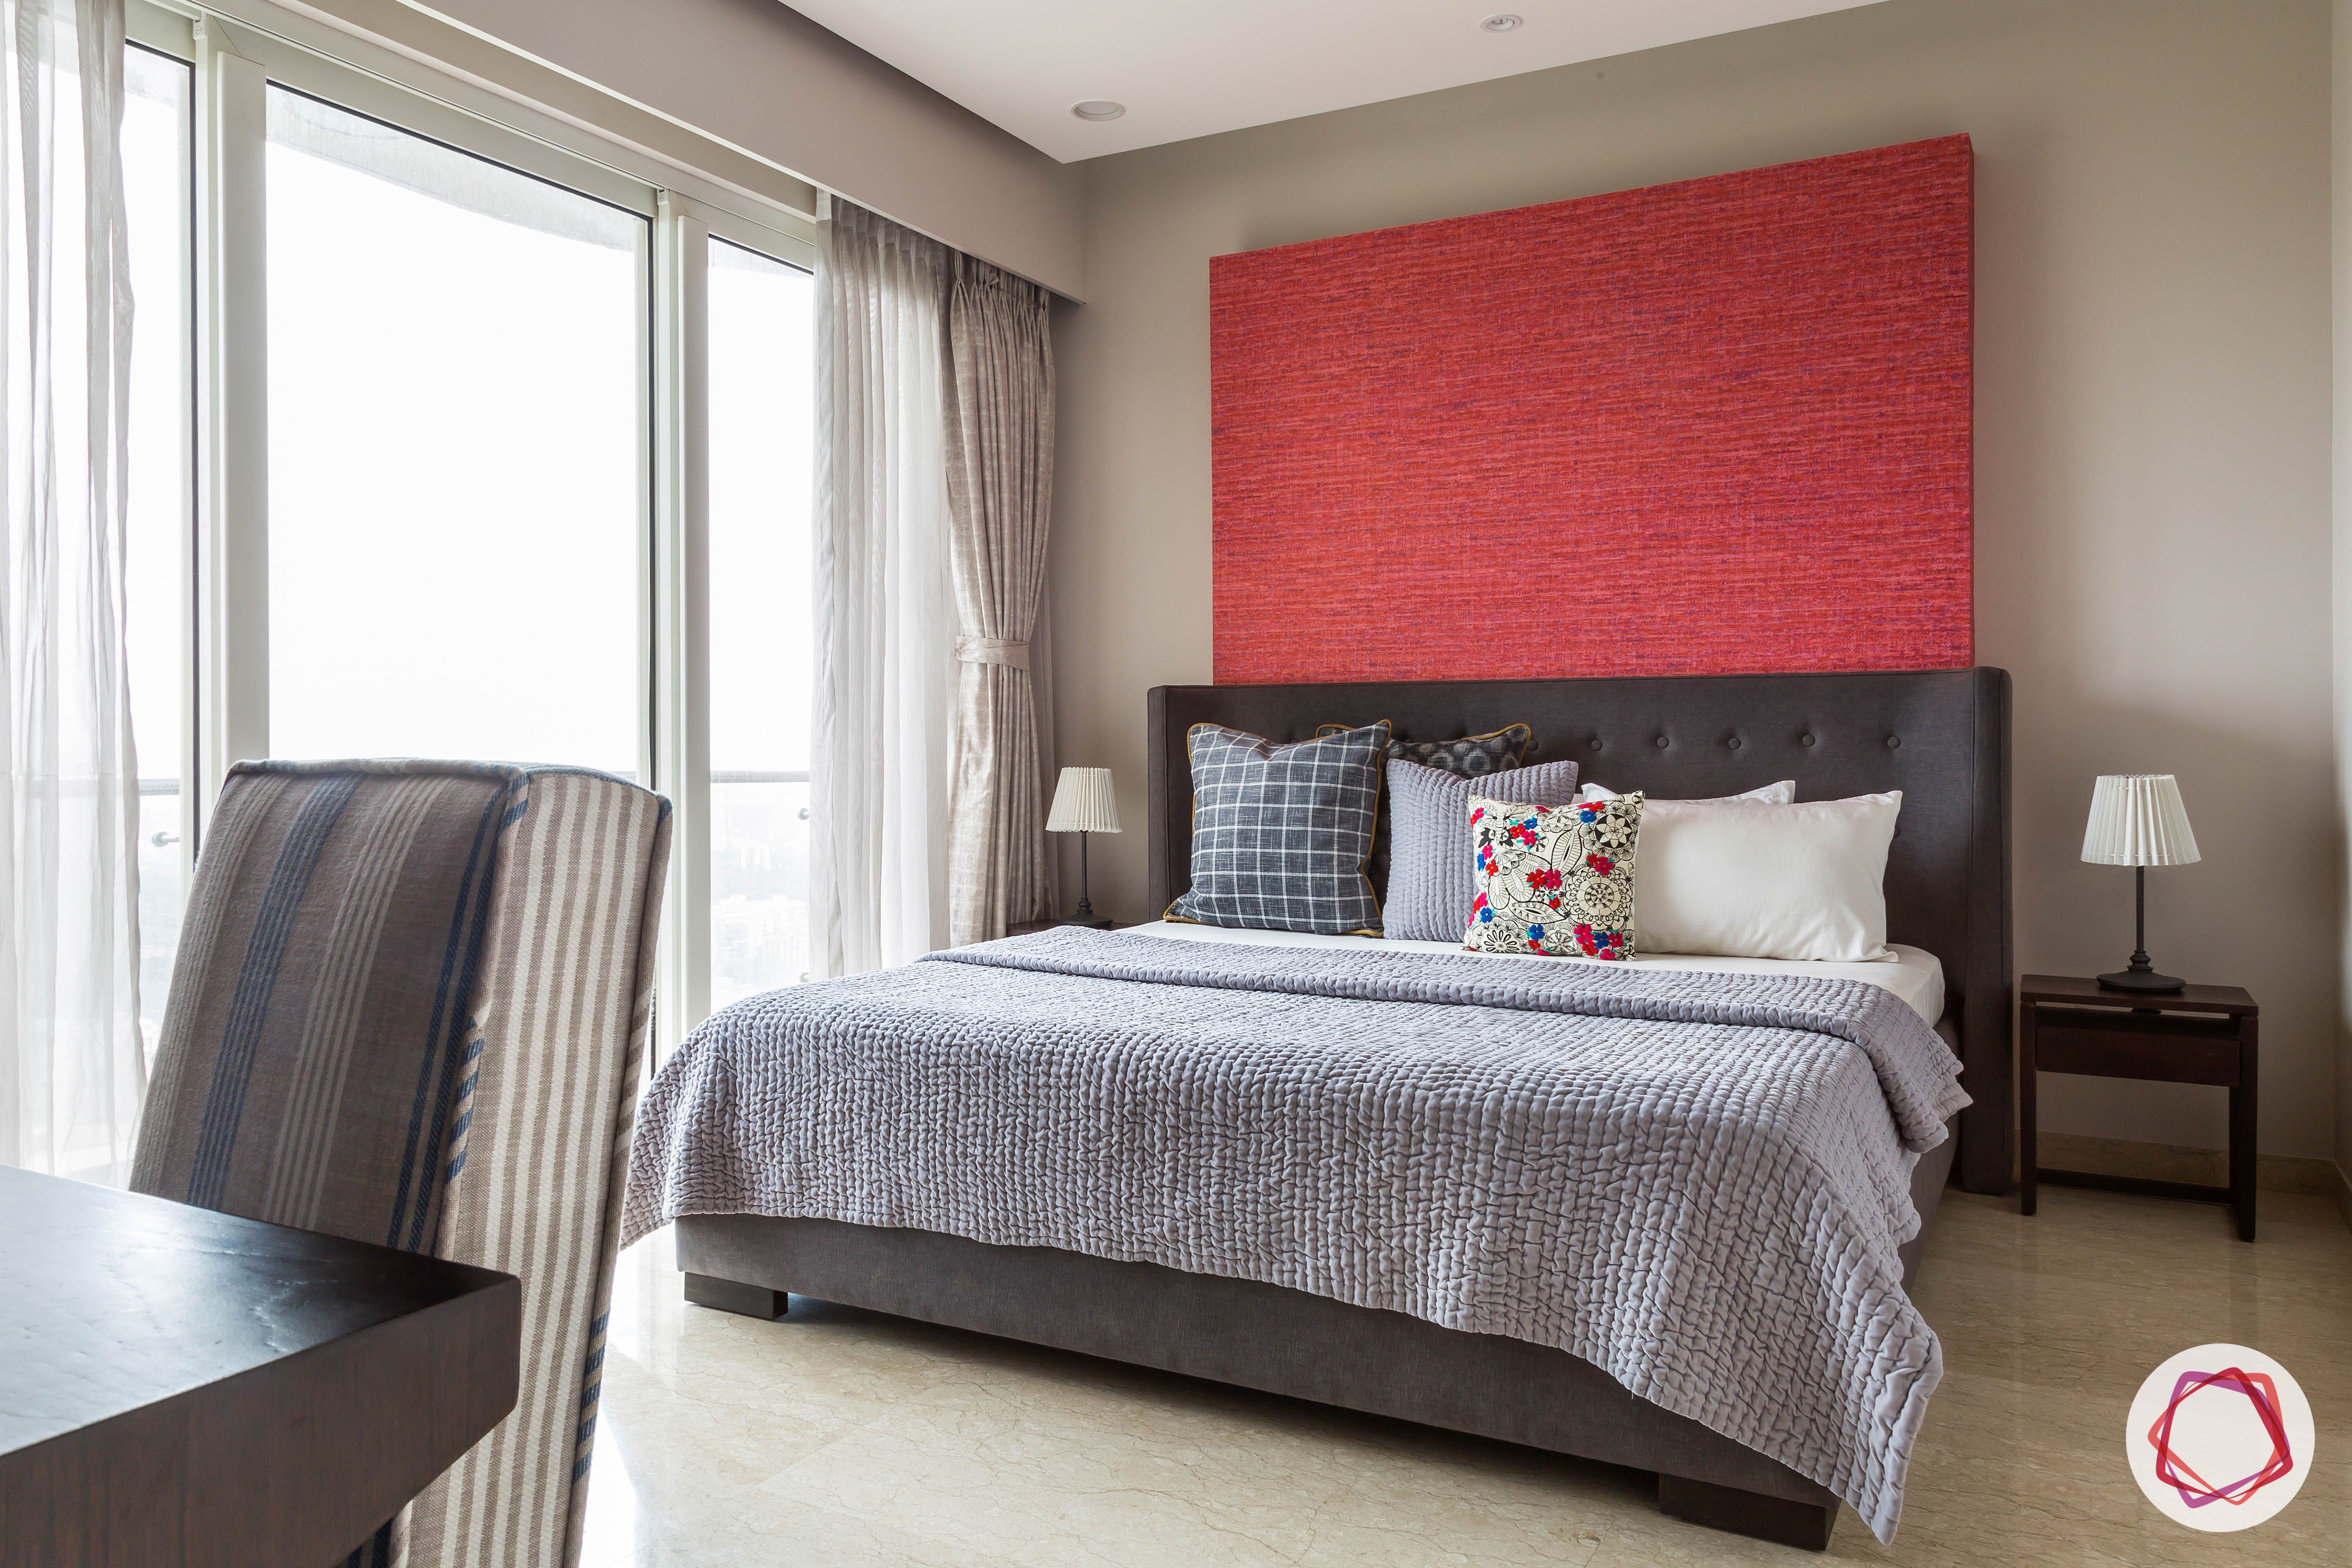 lodha group-red wall panel designs-grey headboard designs-modern furniture designs